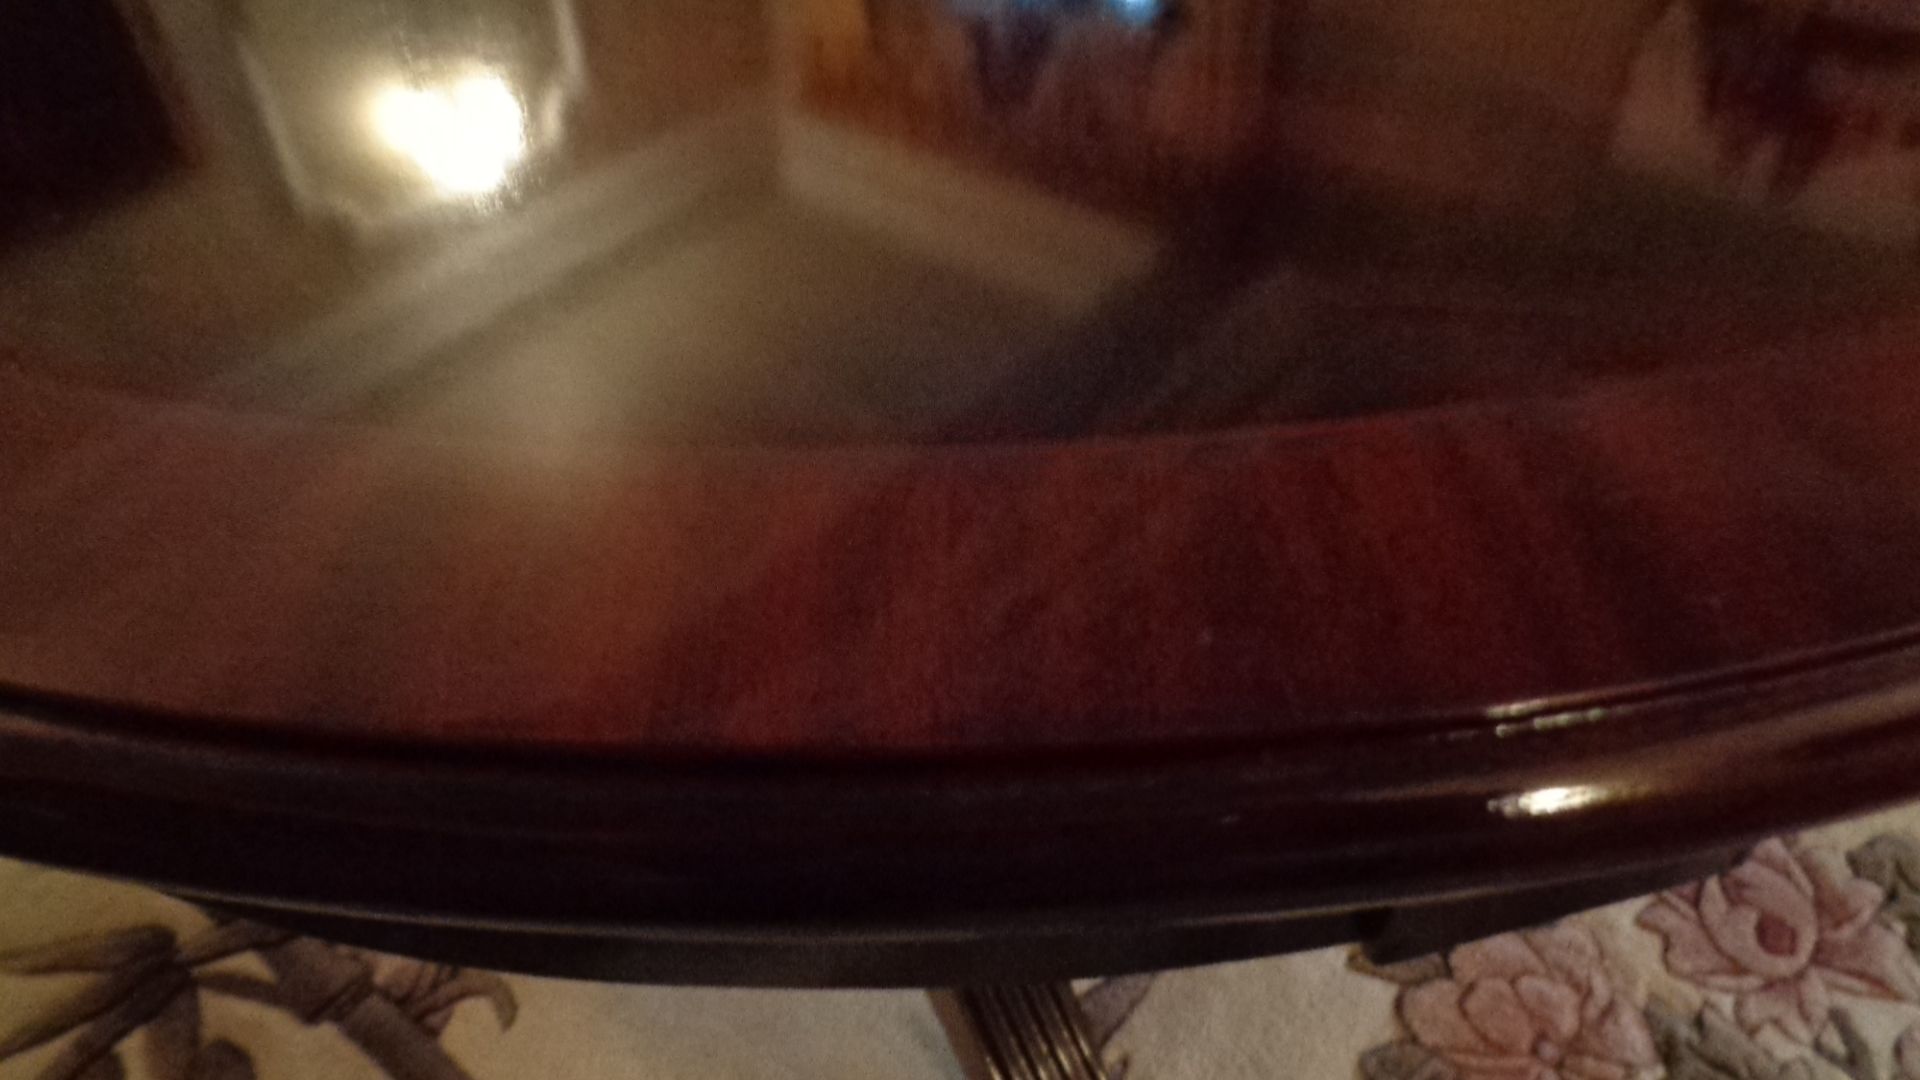 Mahogany Inlead Coffee Table Brass Feet 78Cms Wide X 127Cms Long X 45Cms High - Image 3 of 3